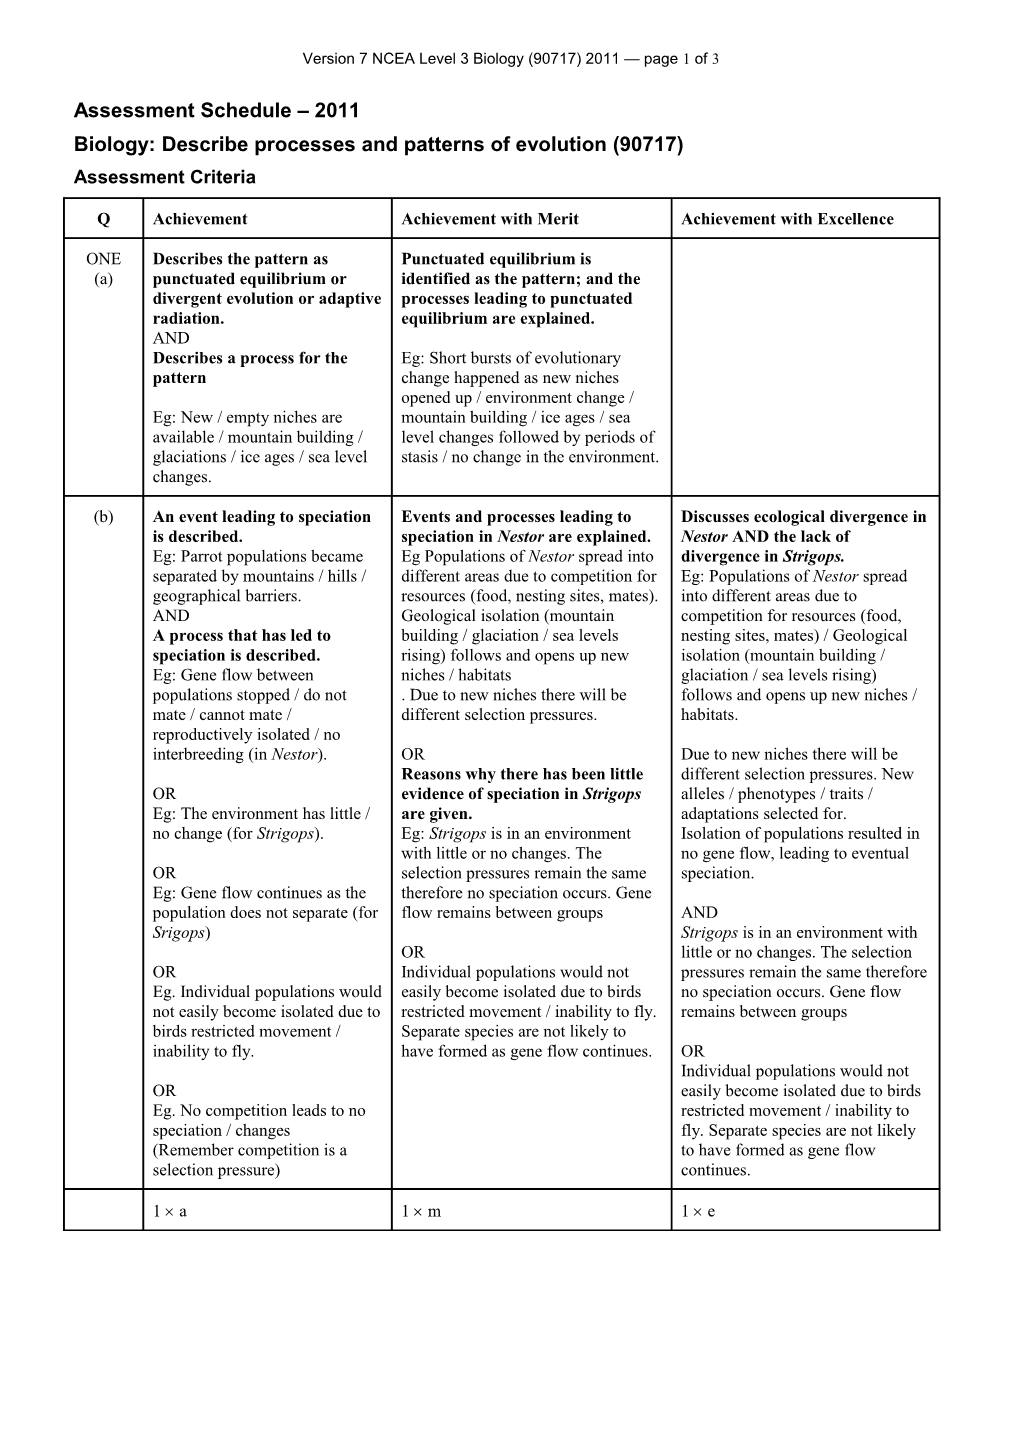 Level 3 Biology (90717) 2011 Assessment Schedule